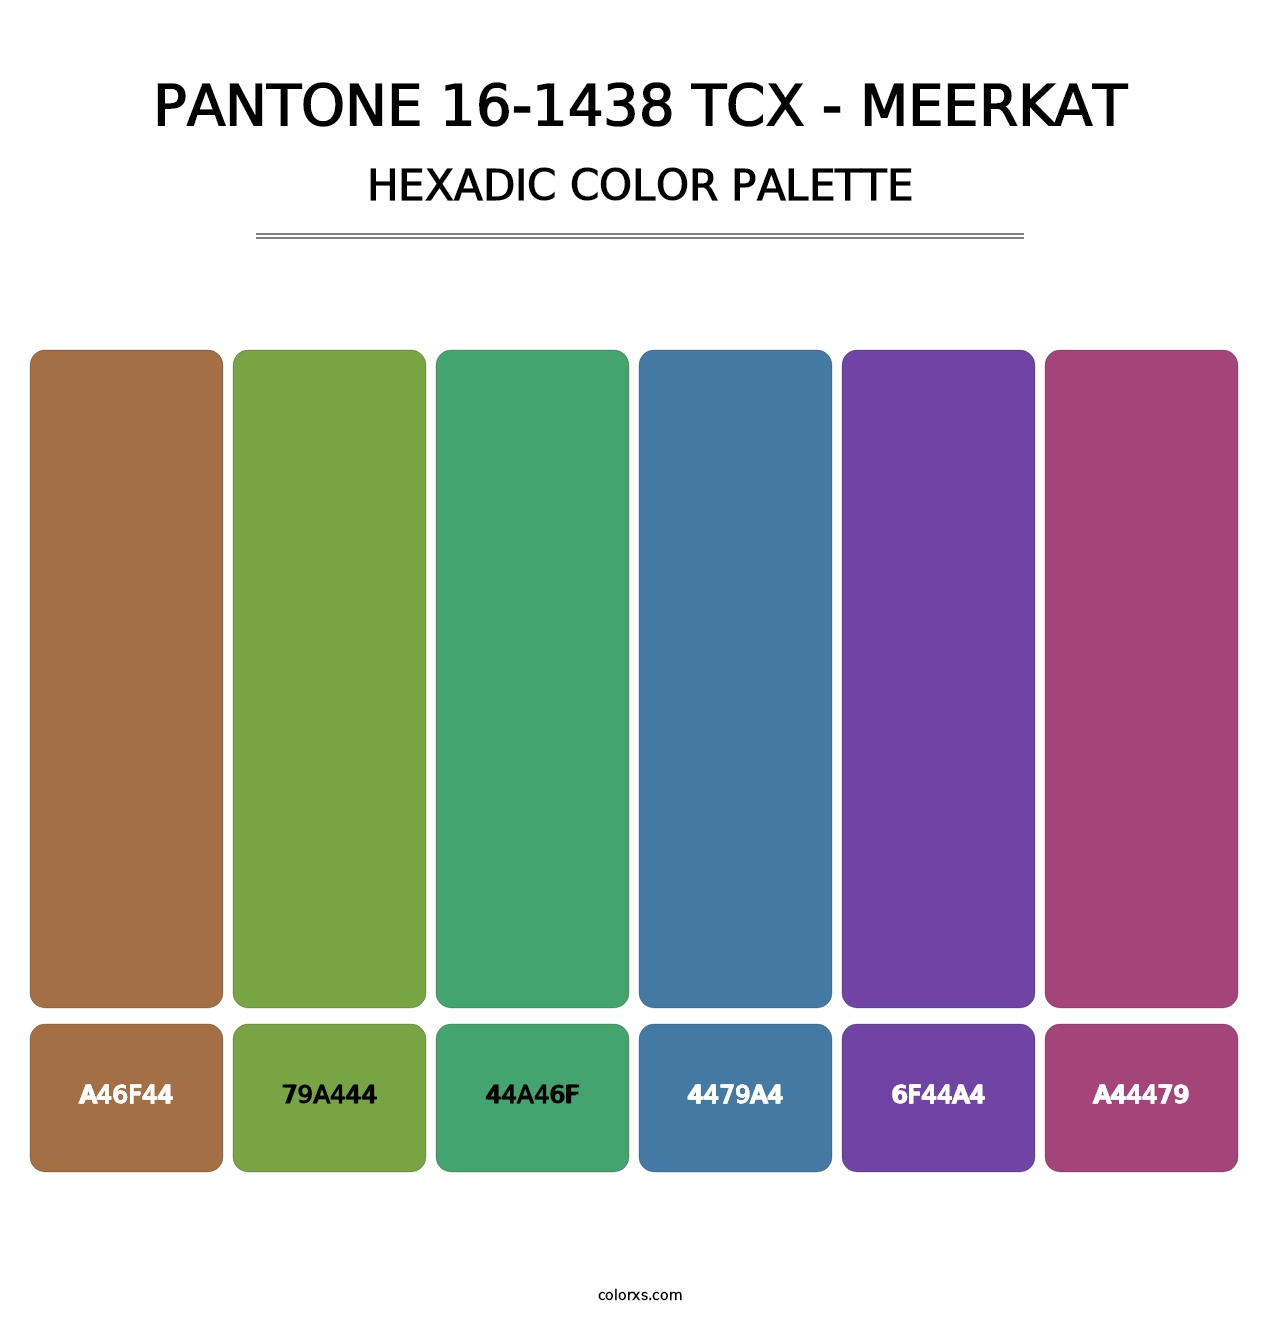 PANTONE 16-1438 TCX - Meerkat - Hexadic Color Palette